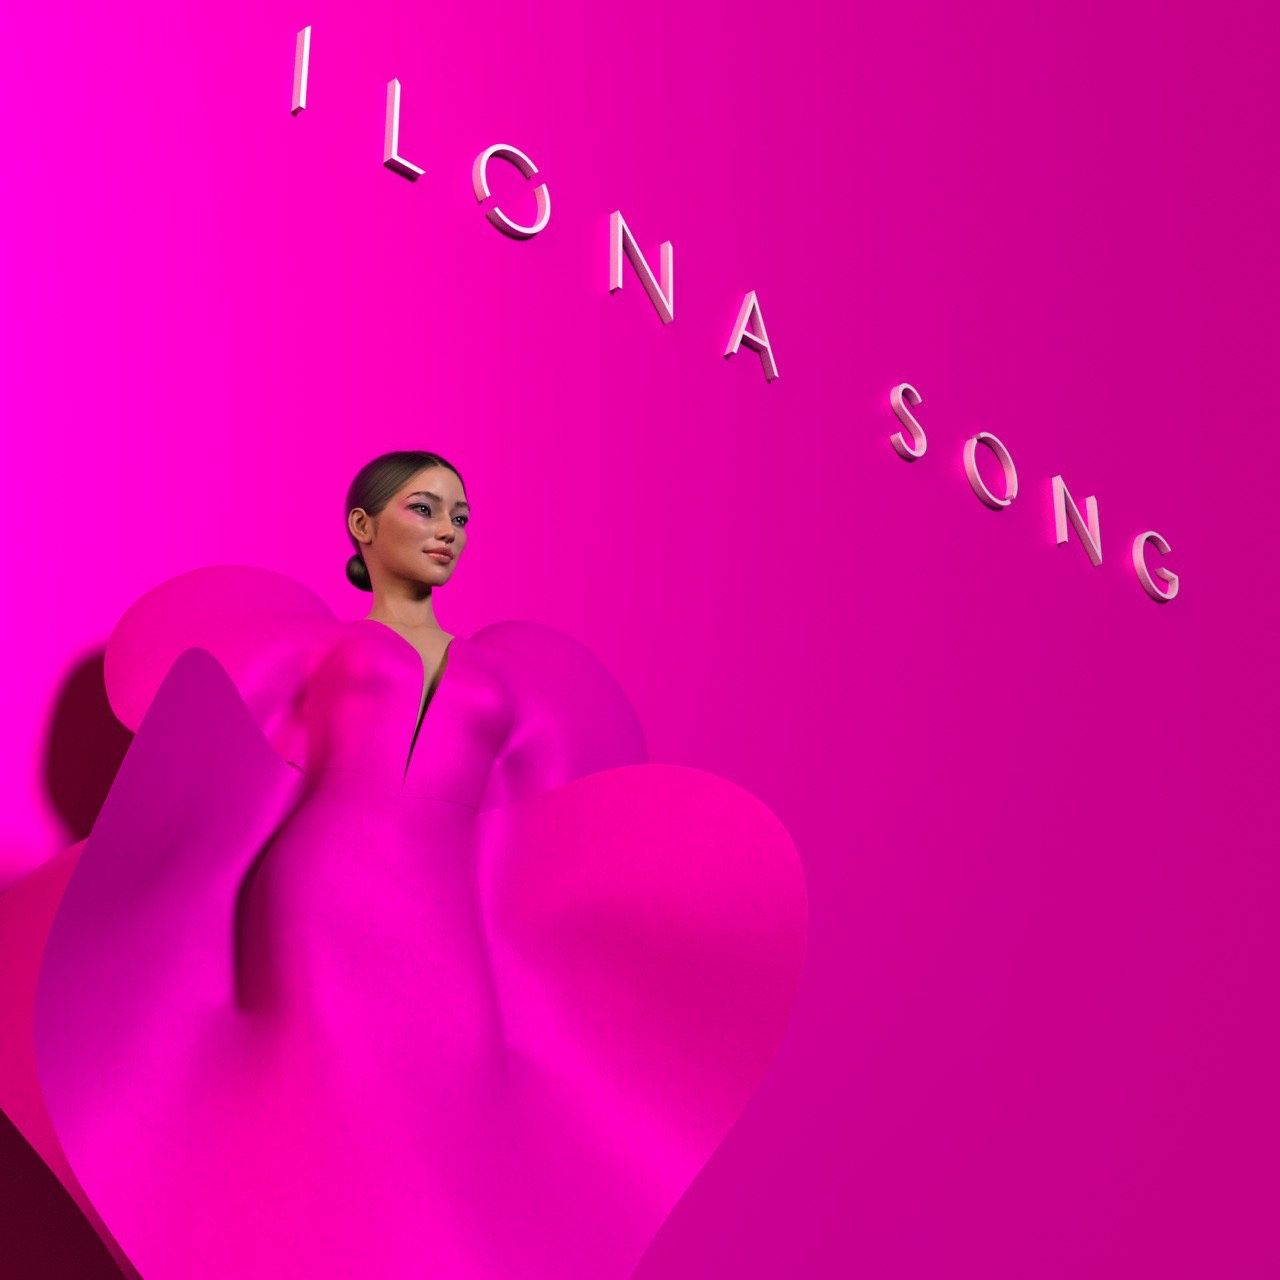 Designer behind the LUV dress, Ilona Song